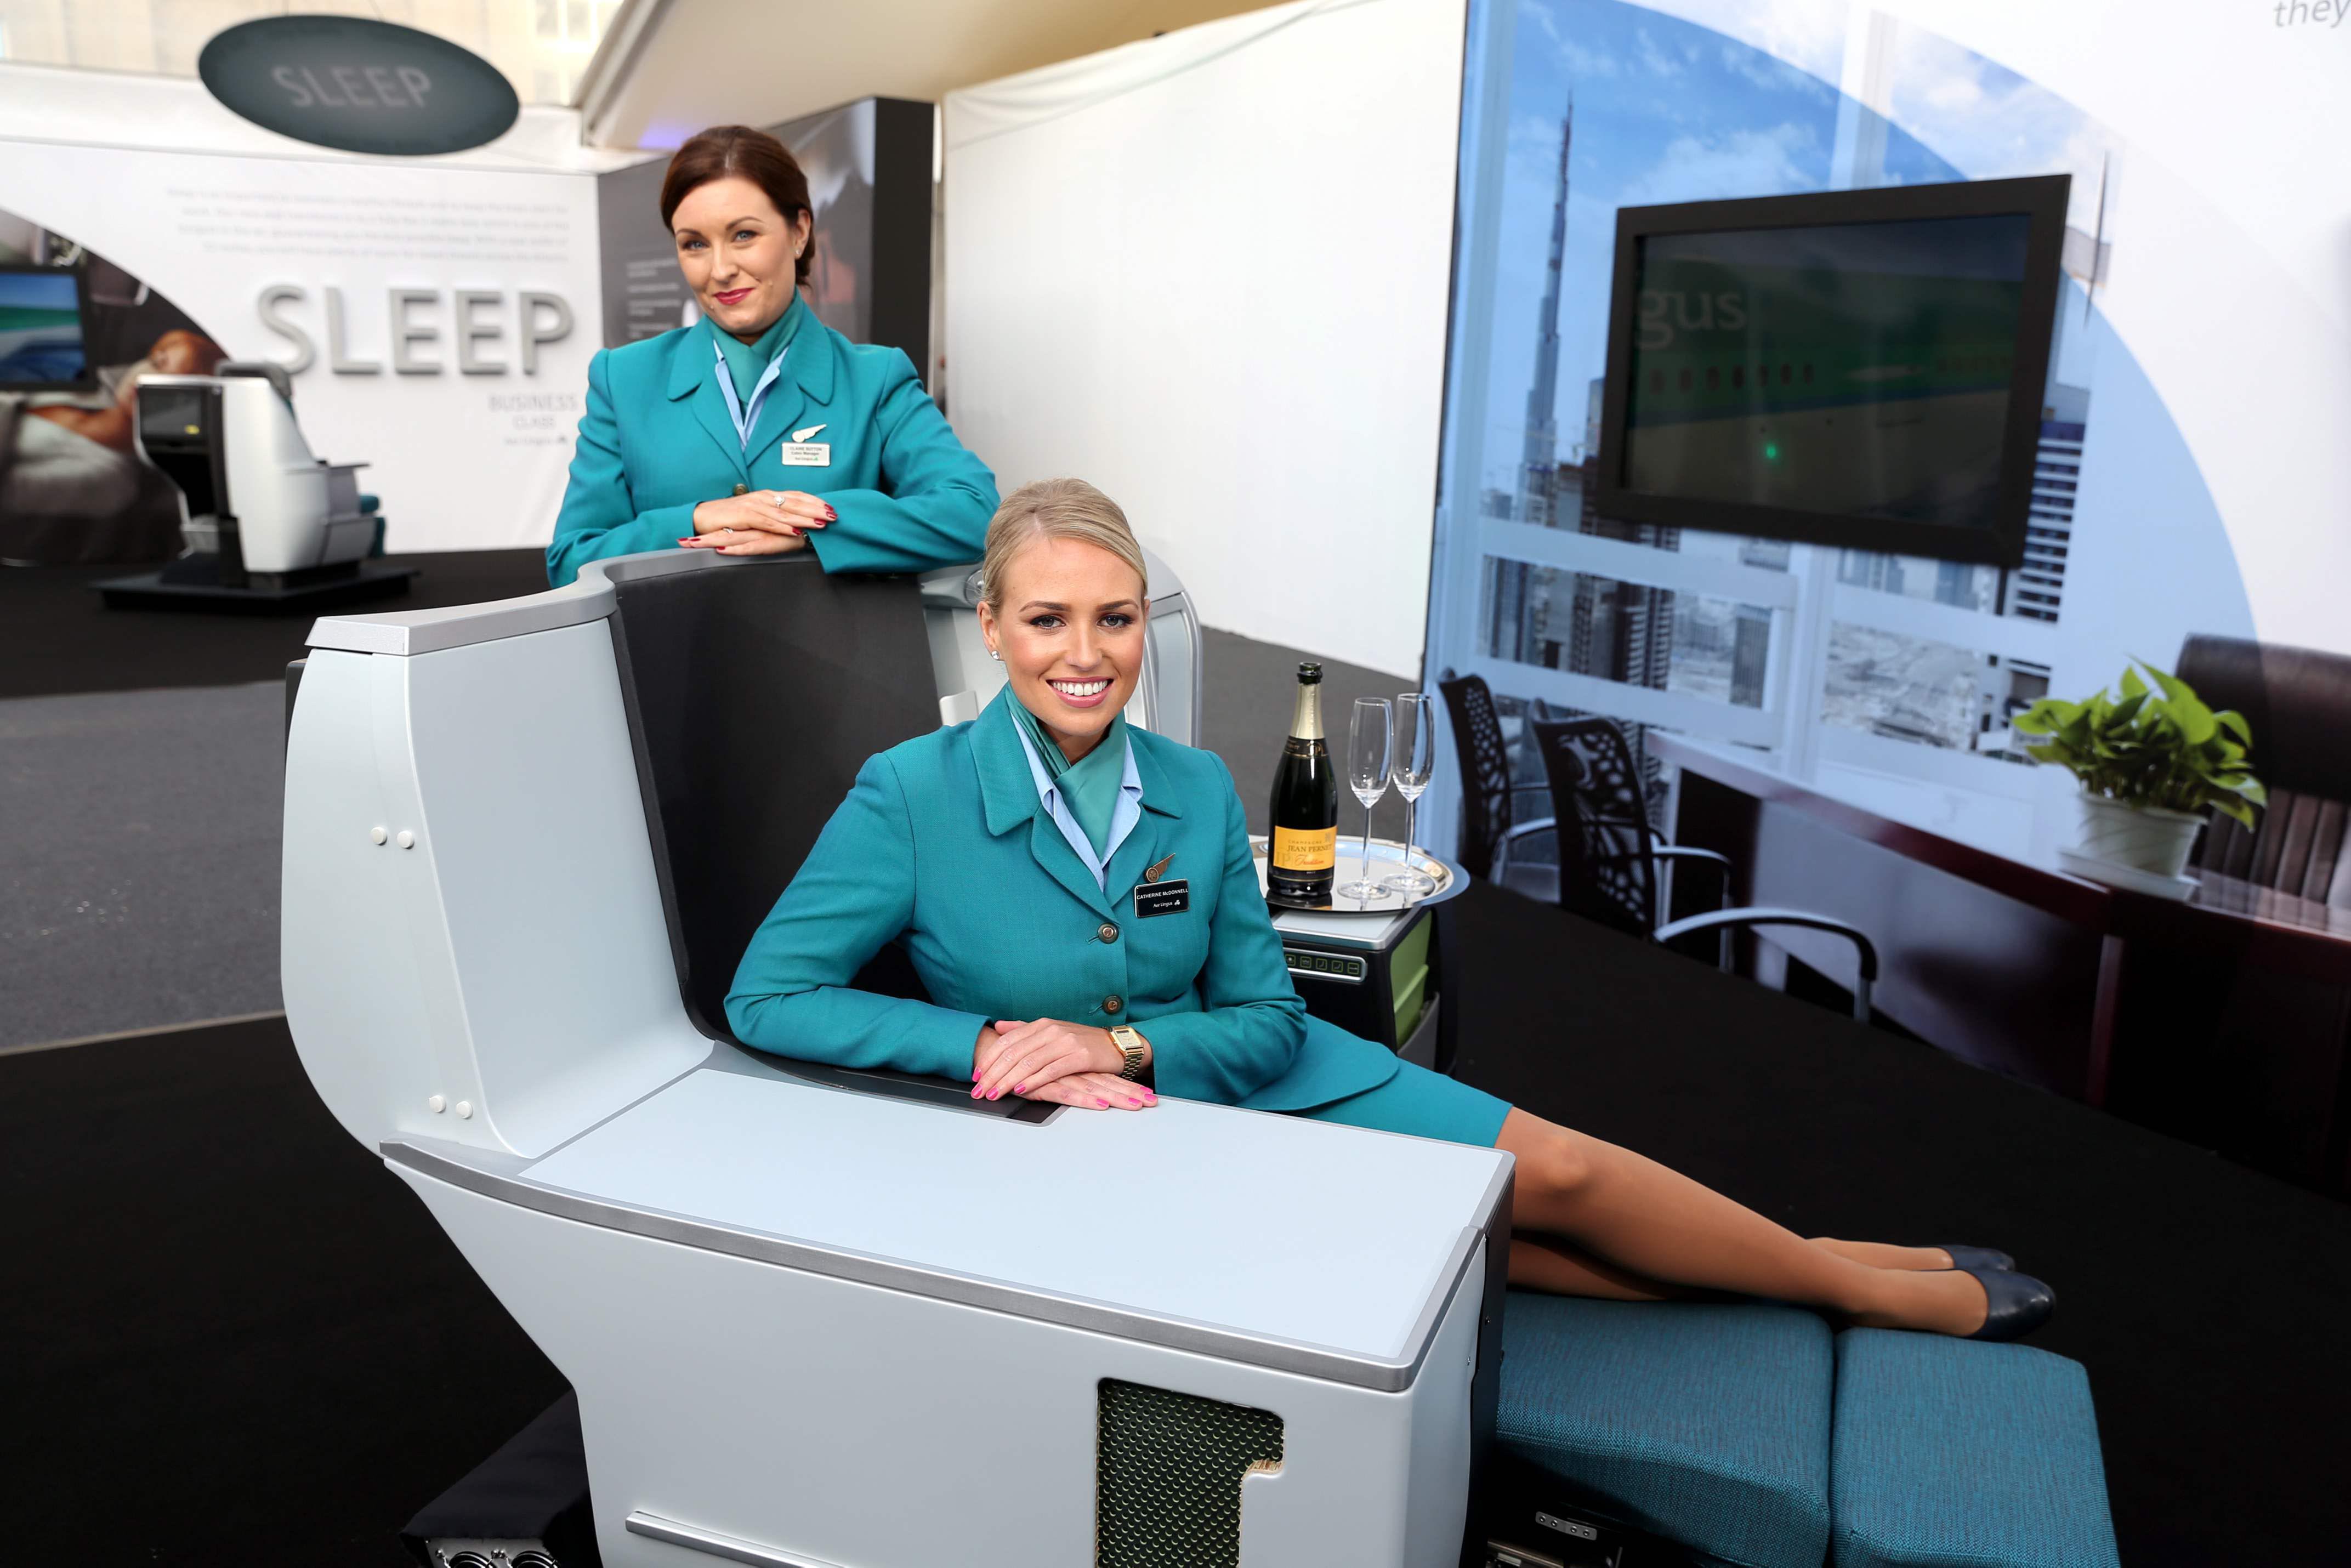 Aer Lingus Business Class to Europe for 25K Avios: Where to Go